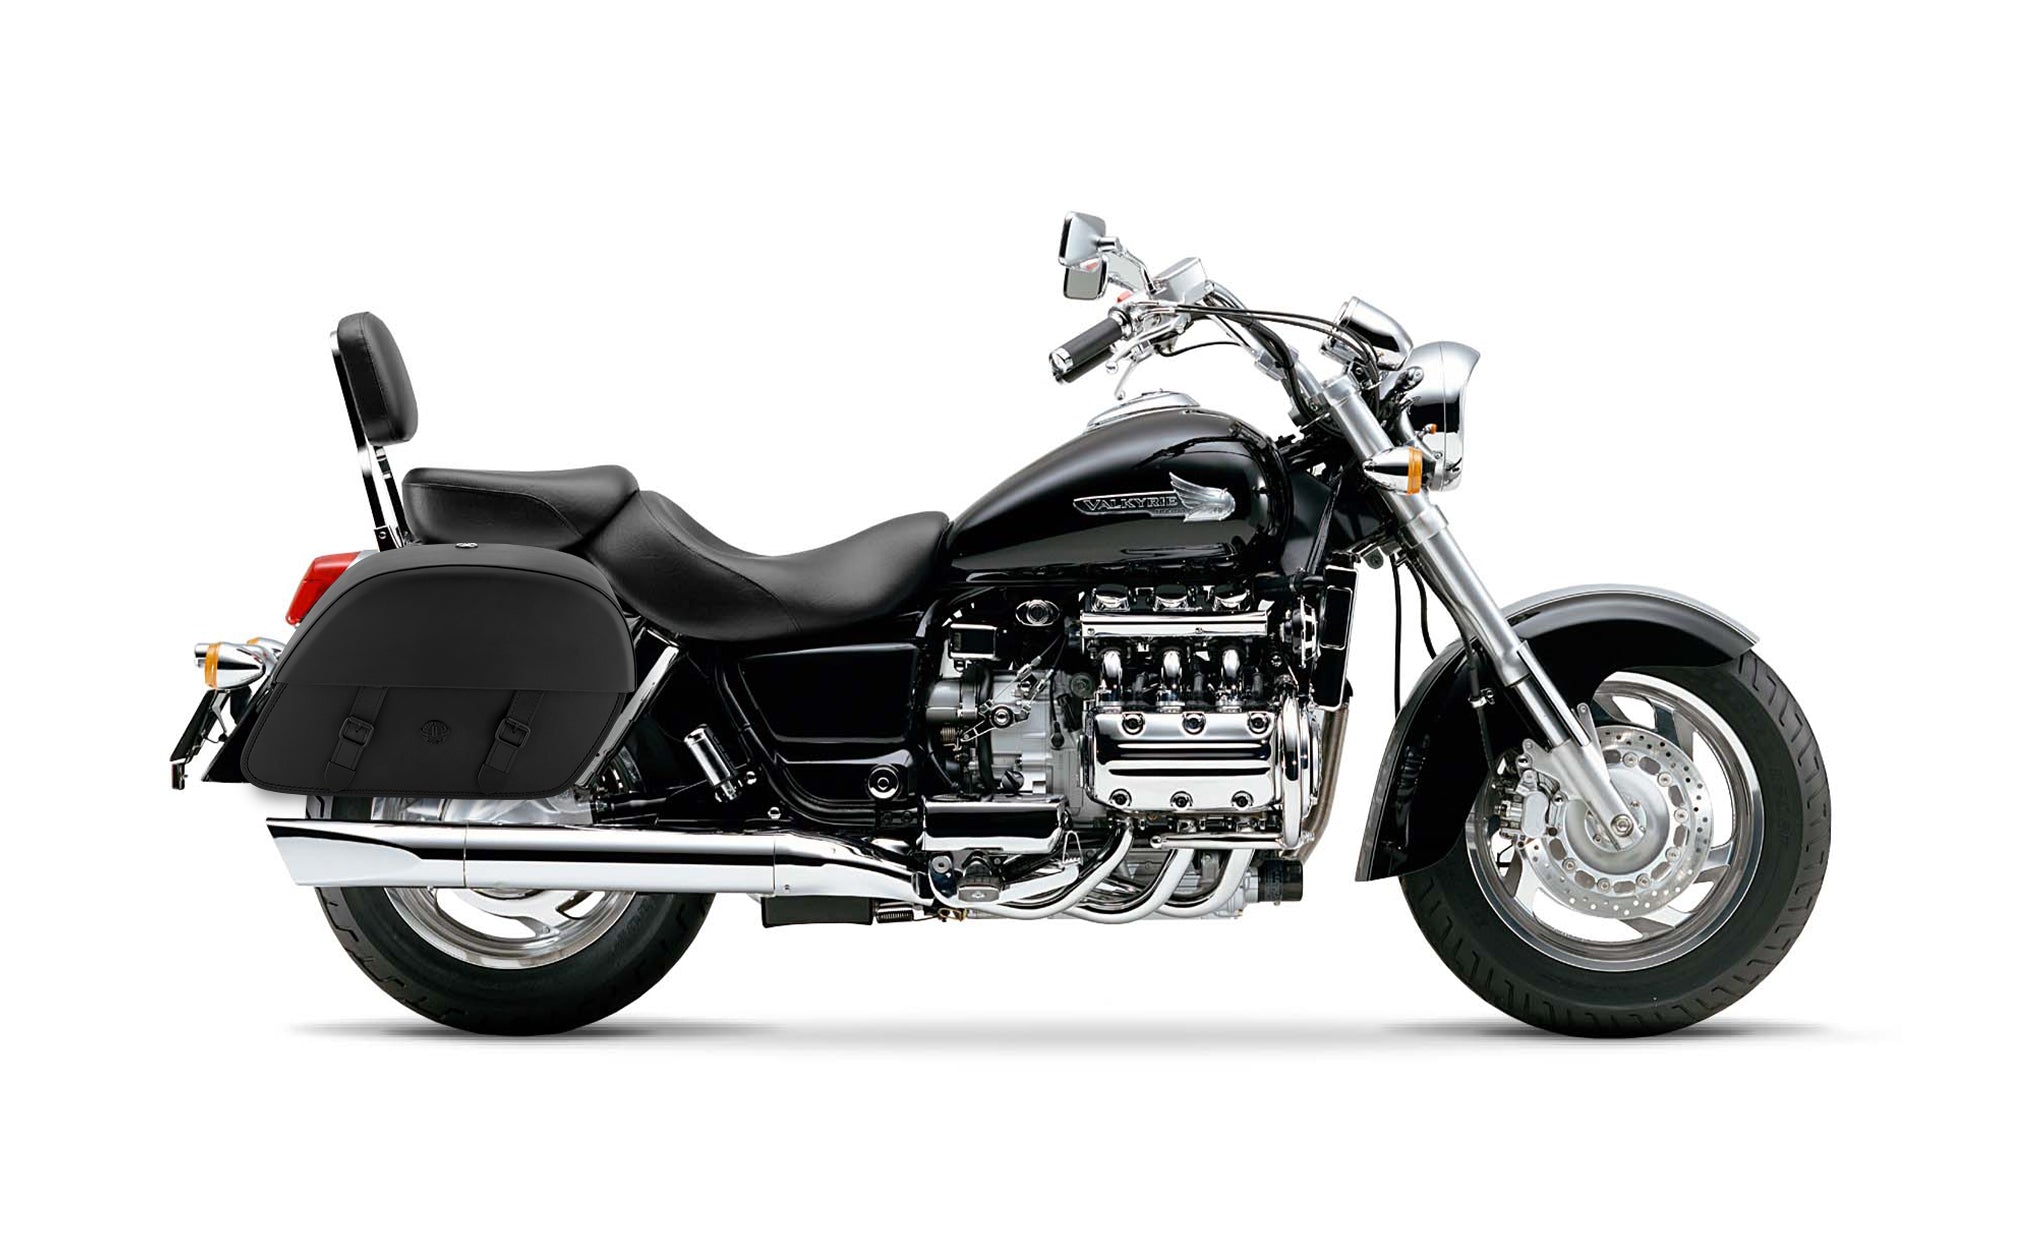 Viking Baelor Large Honda Valkyrie 1500 Standard Leather Motorcycle Saddlebags on Bike Photo @expand